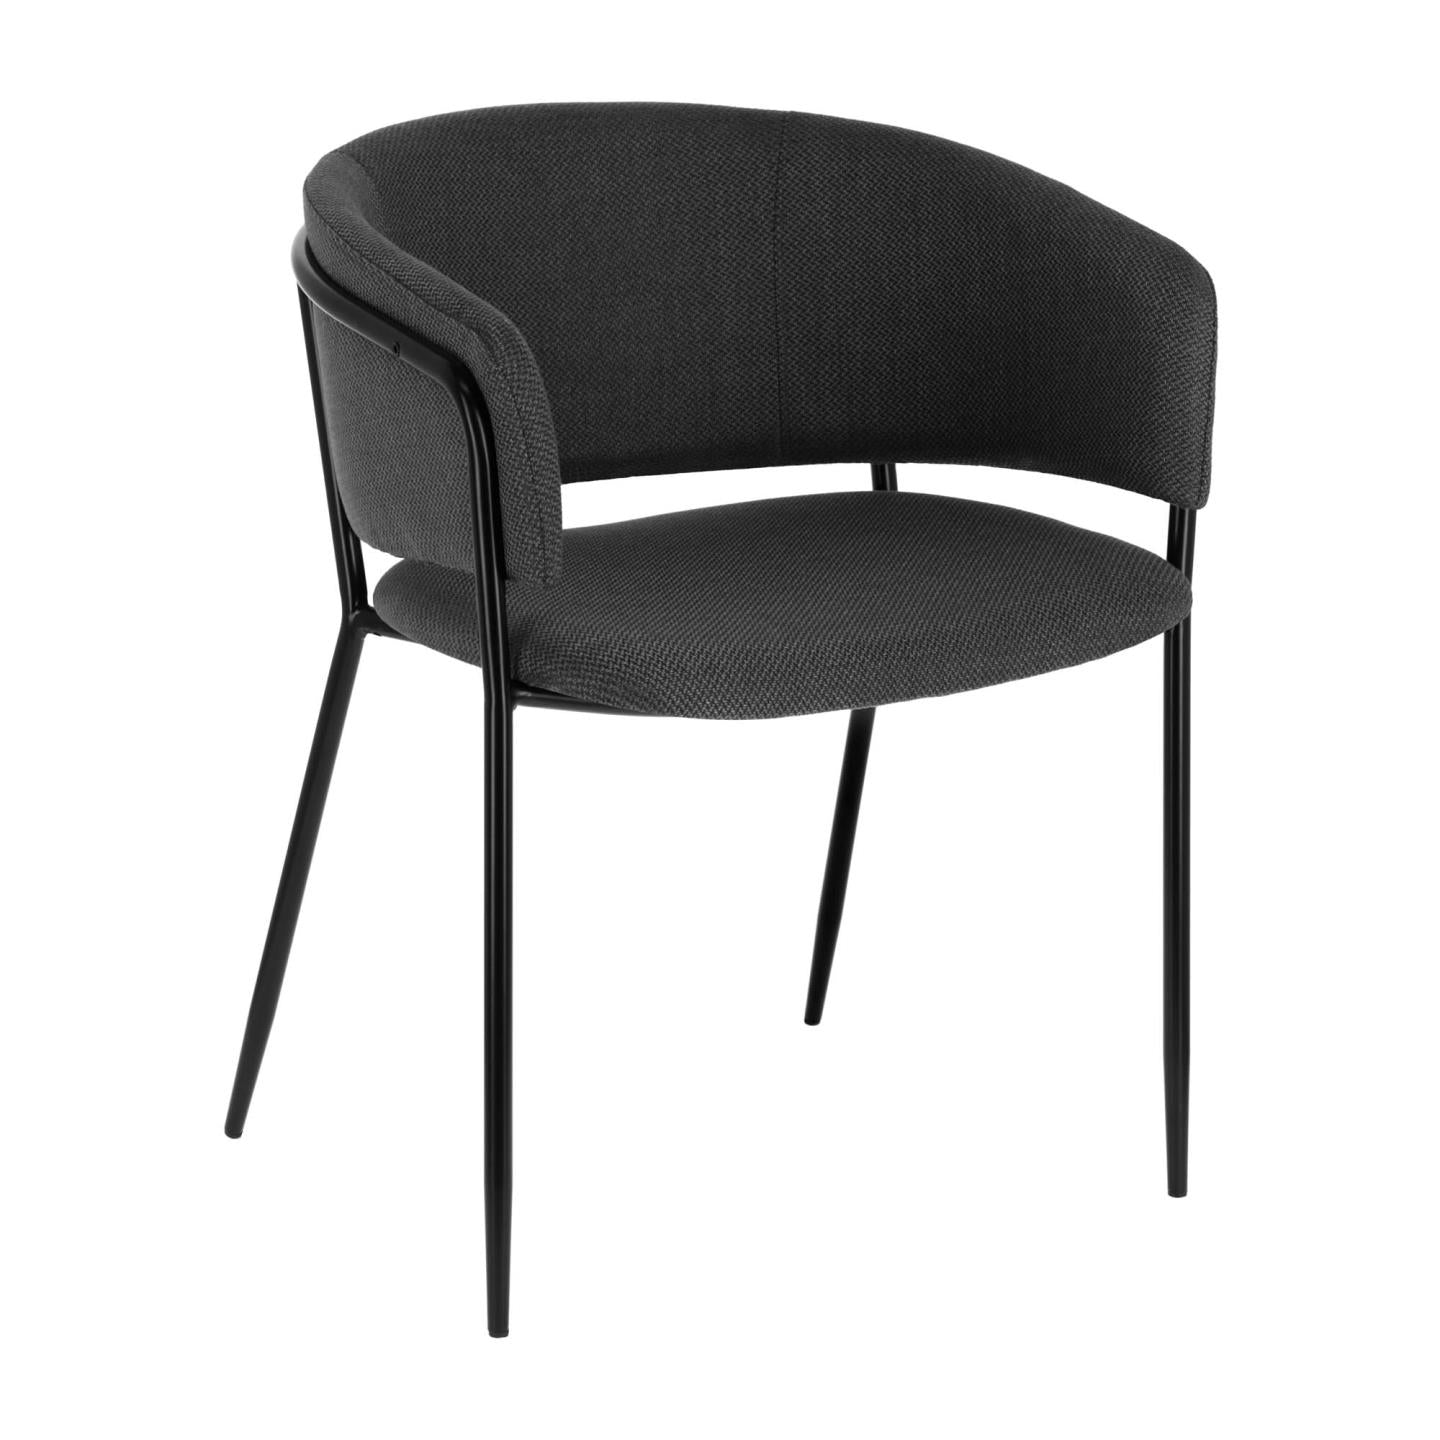 Runnie chair in dark grey with steel legs with black finish